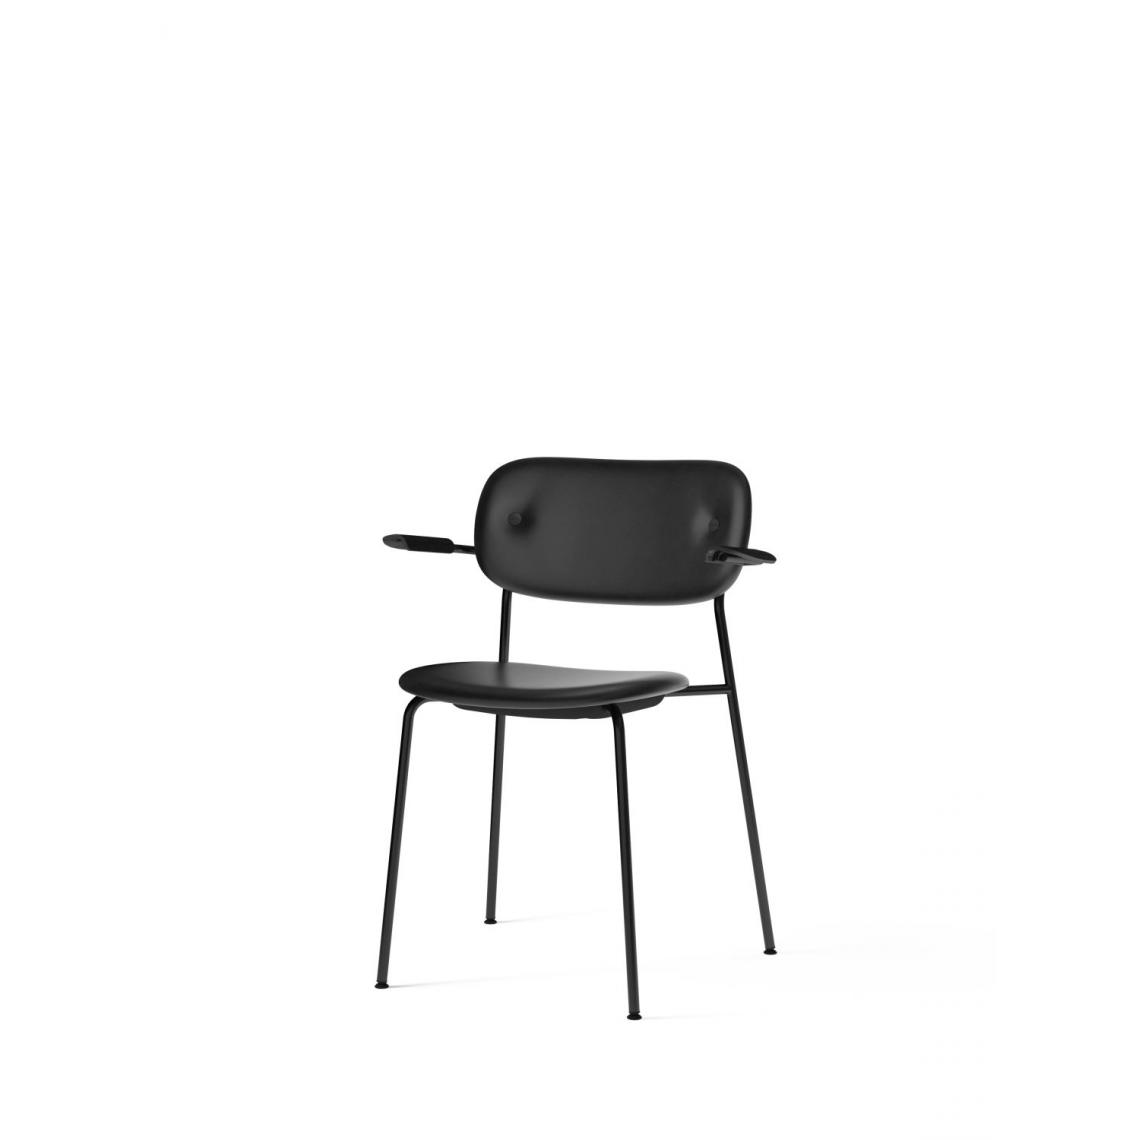 Menu - Co Dining Chair avec accoudoir - noir - MenuCoChairDakar0842 - chêne, noir - Chaises